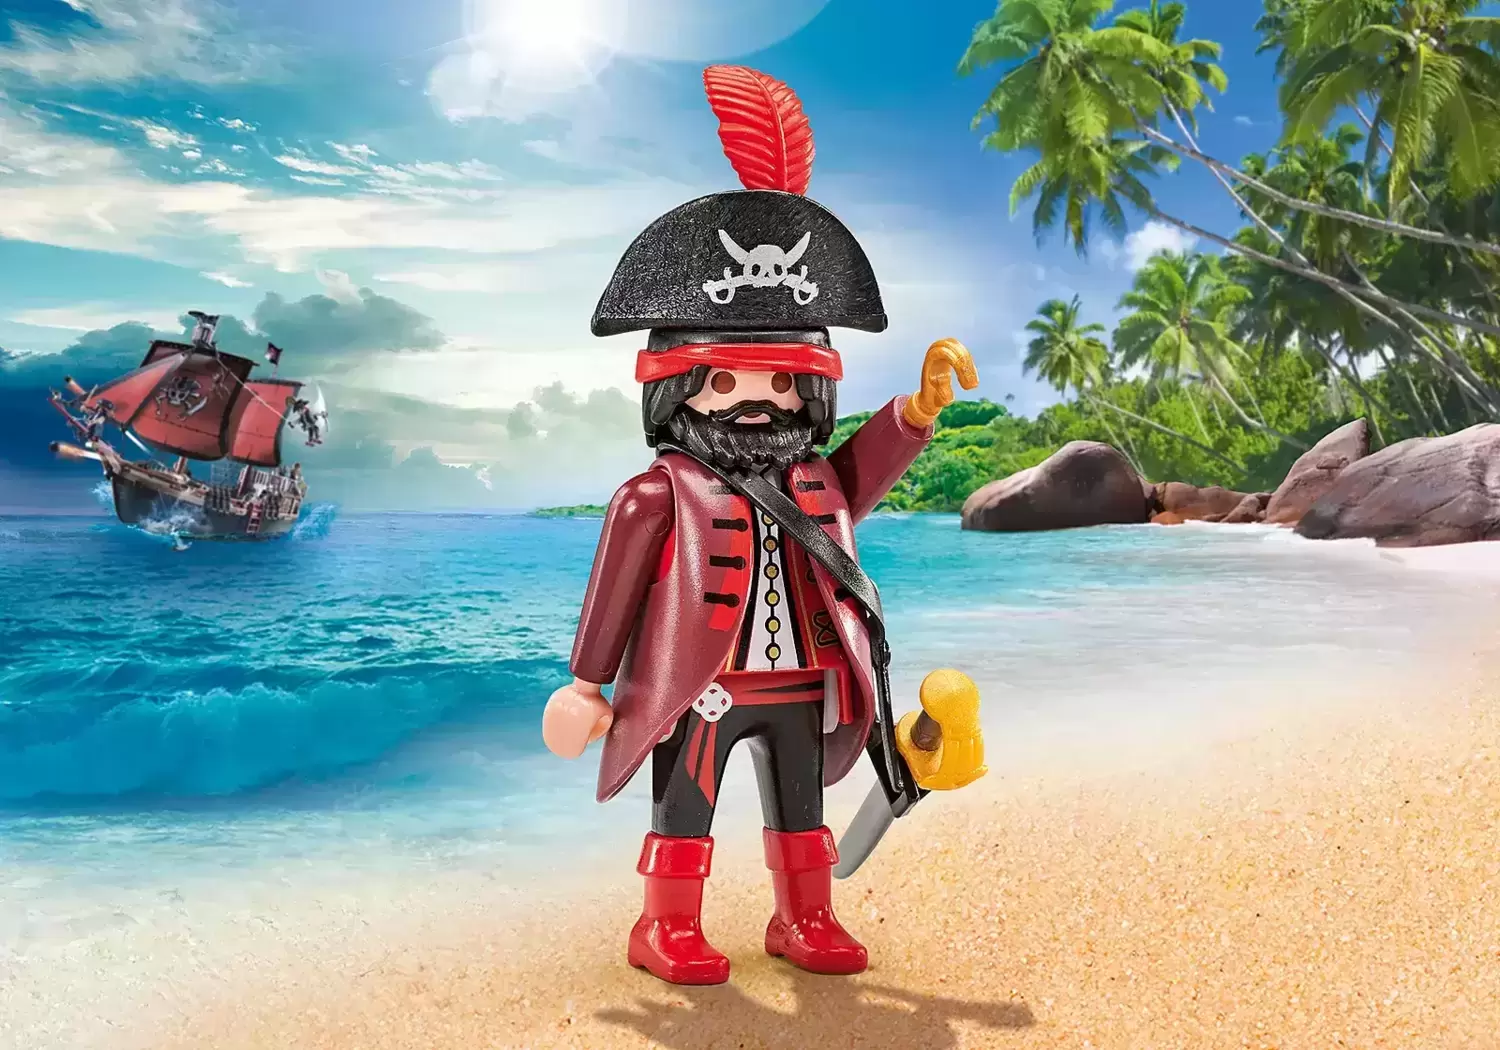 Pirate Playmobil - Pirate\'s Leader